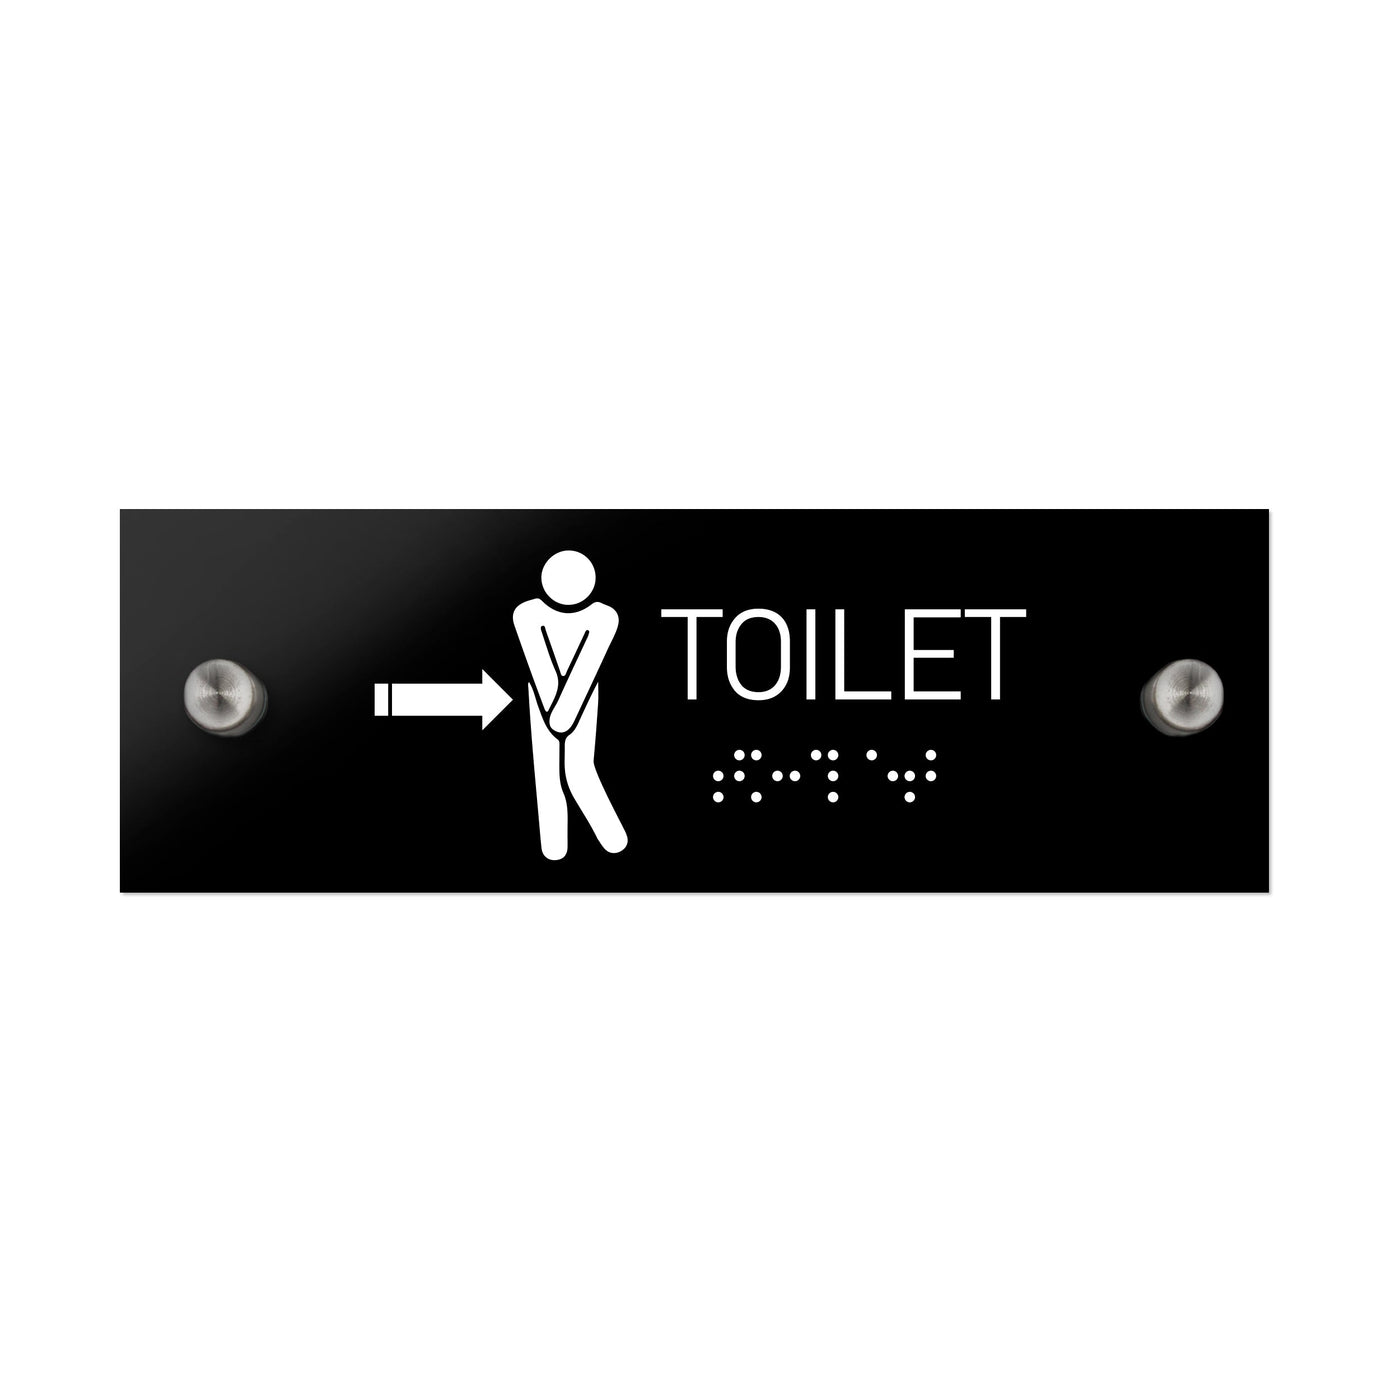 Bathroom Signs - Men Toilet ADA Signs With Braille - Black Acrylic